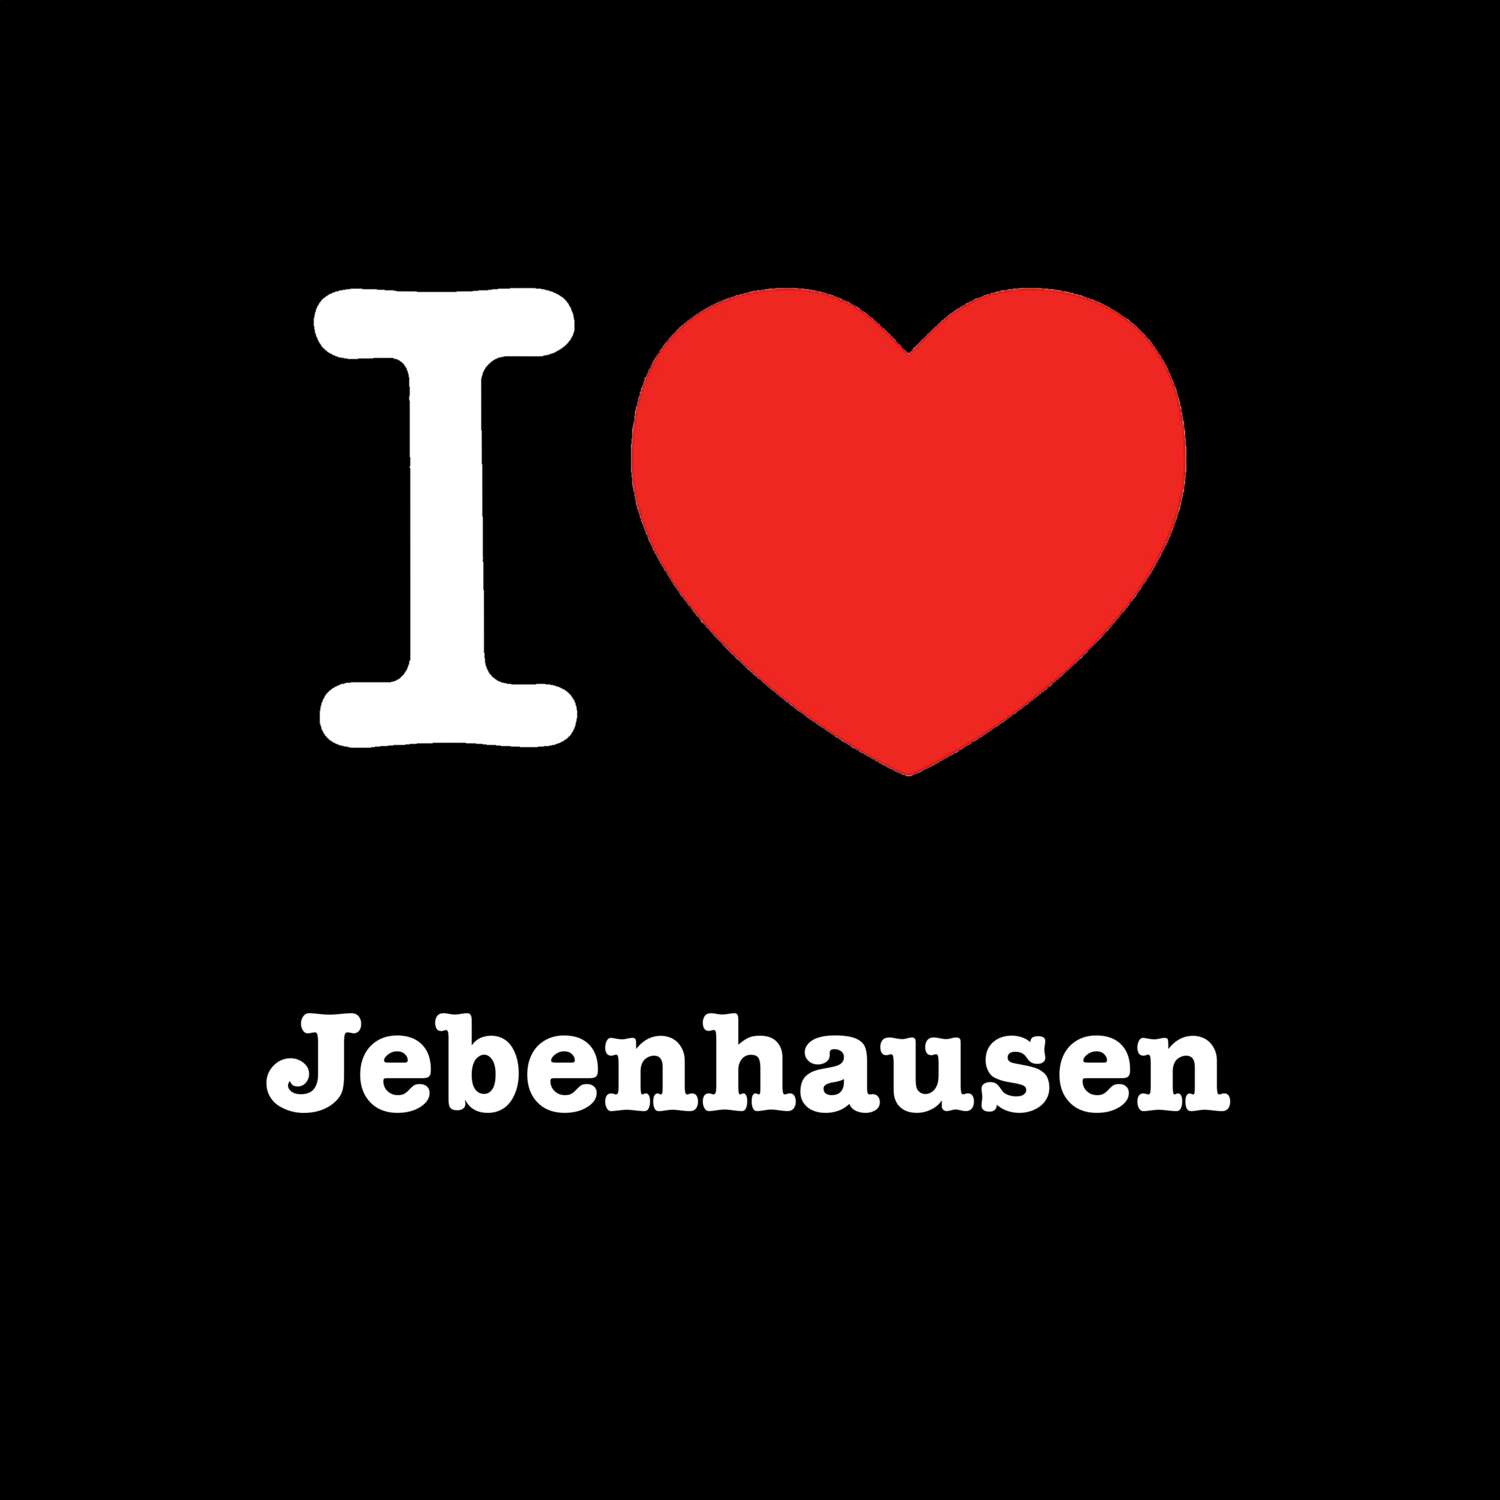 Jebenhausen T-Shirt »I love«